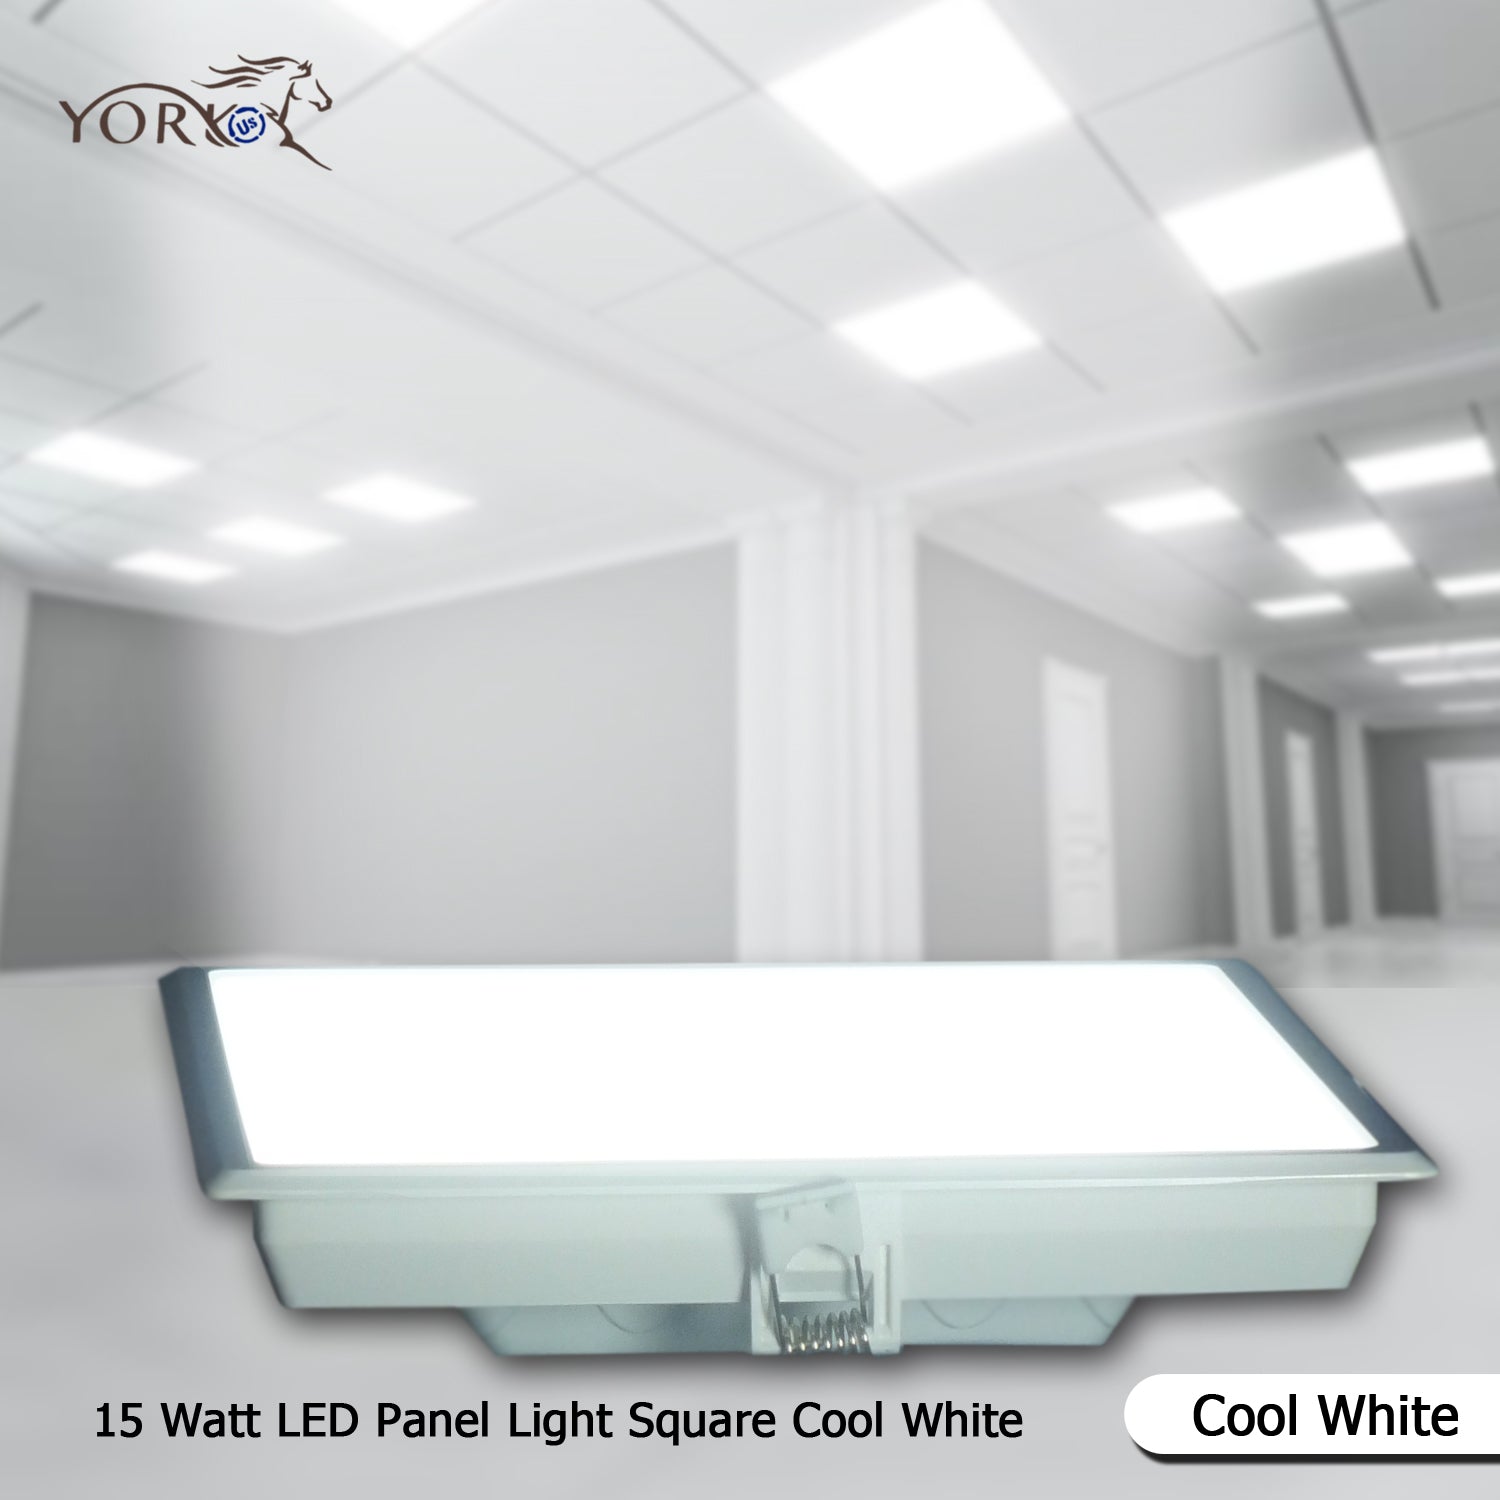 YORKUS LED Panel Light 15Watt Square Cool White